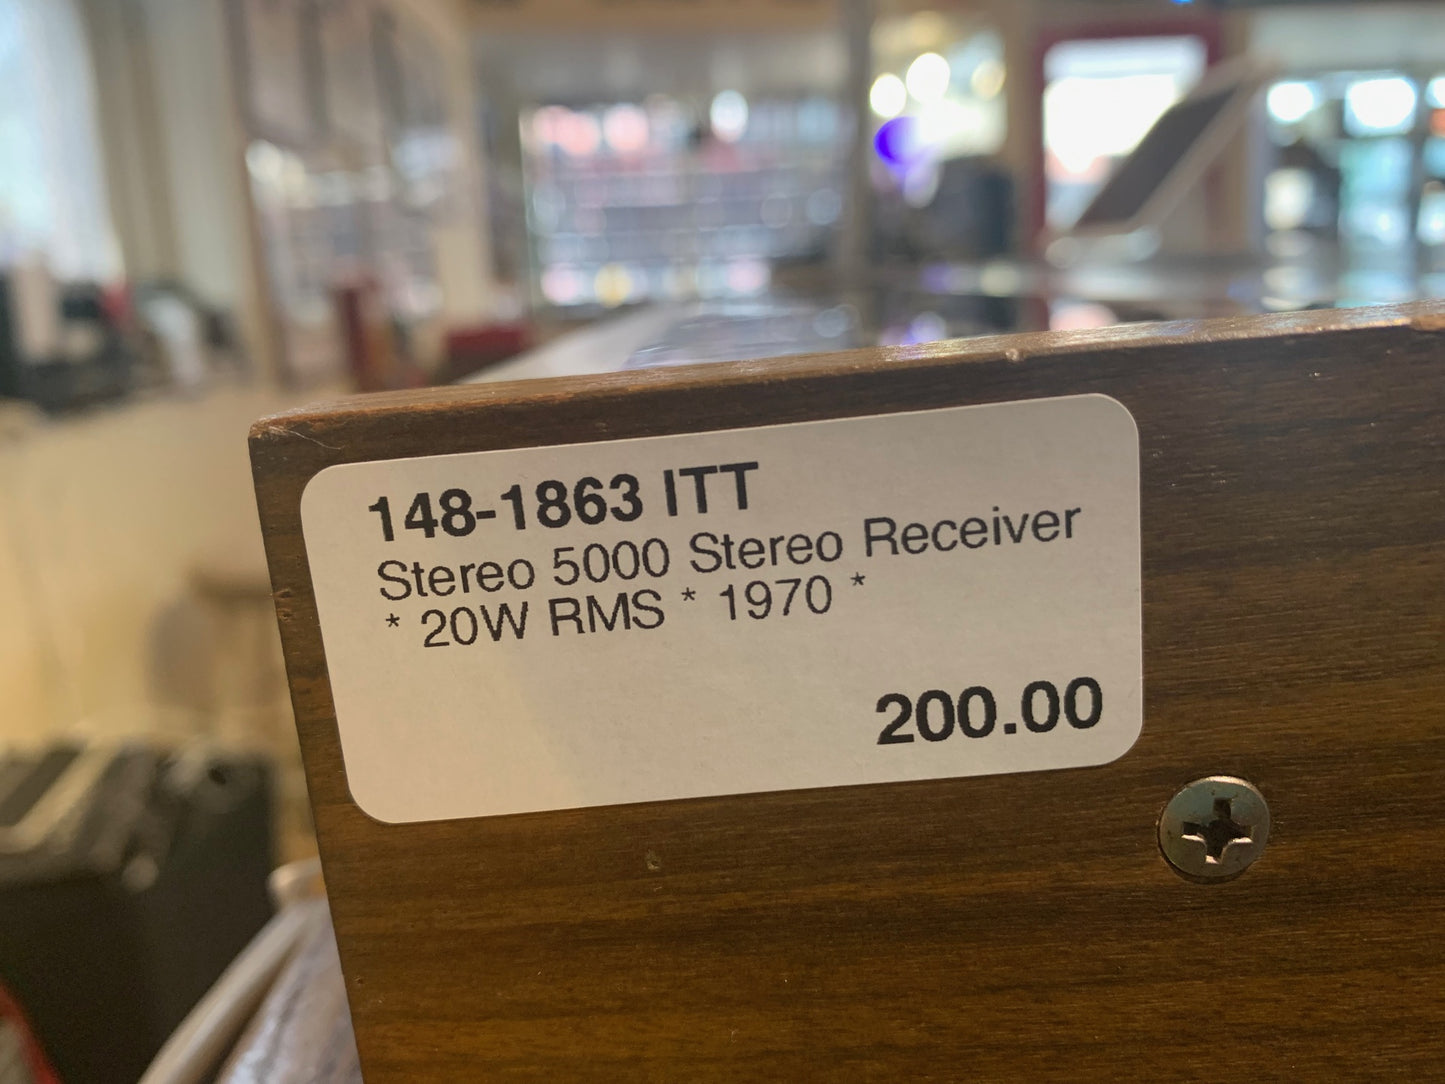 ITT Stereo 5000 * Stereo Receiver * 20W RMS * 1970